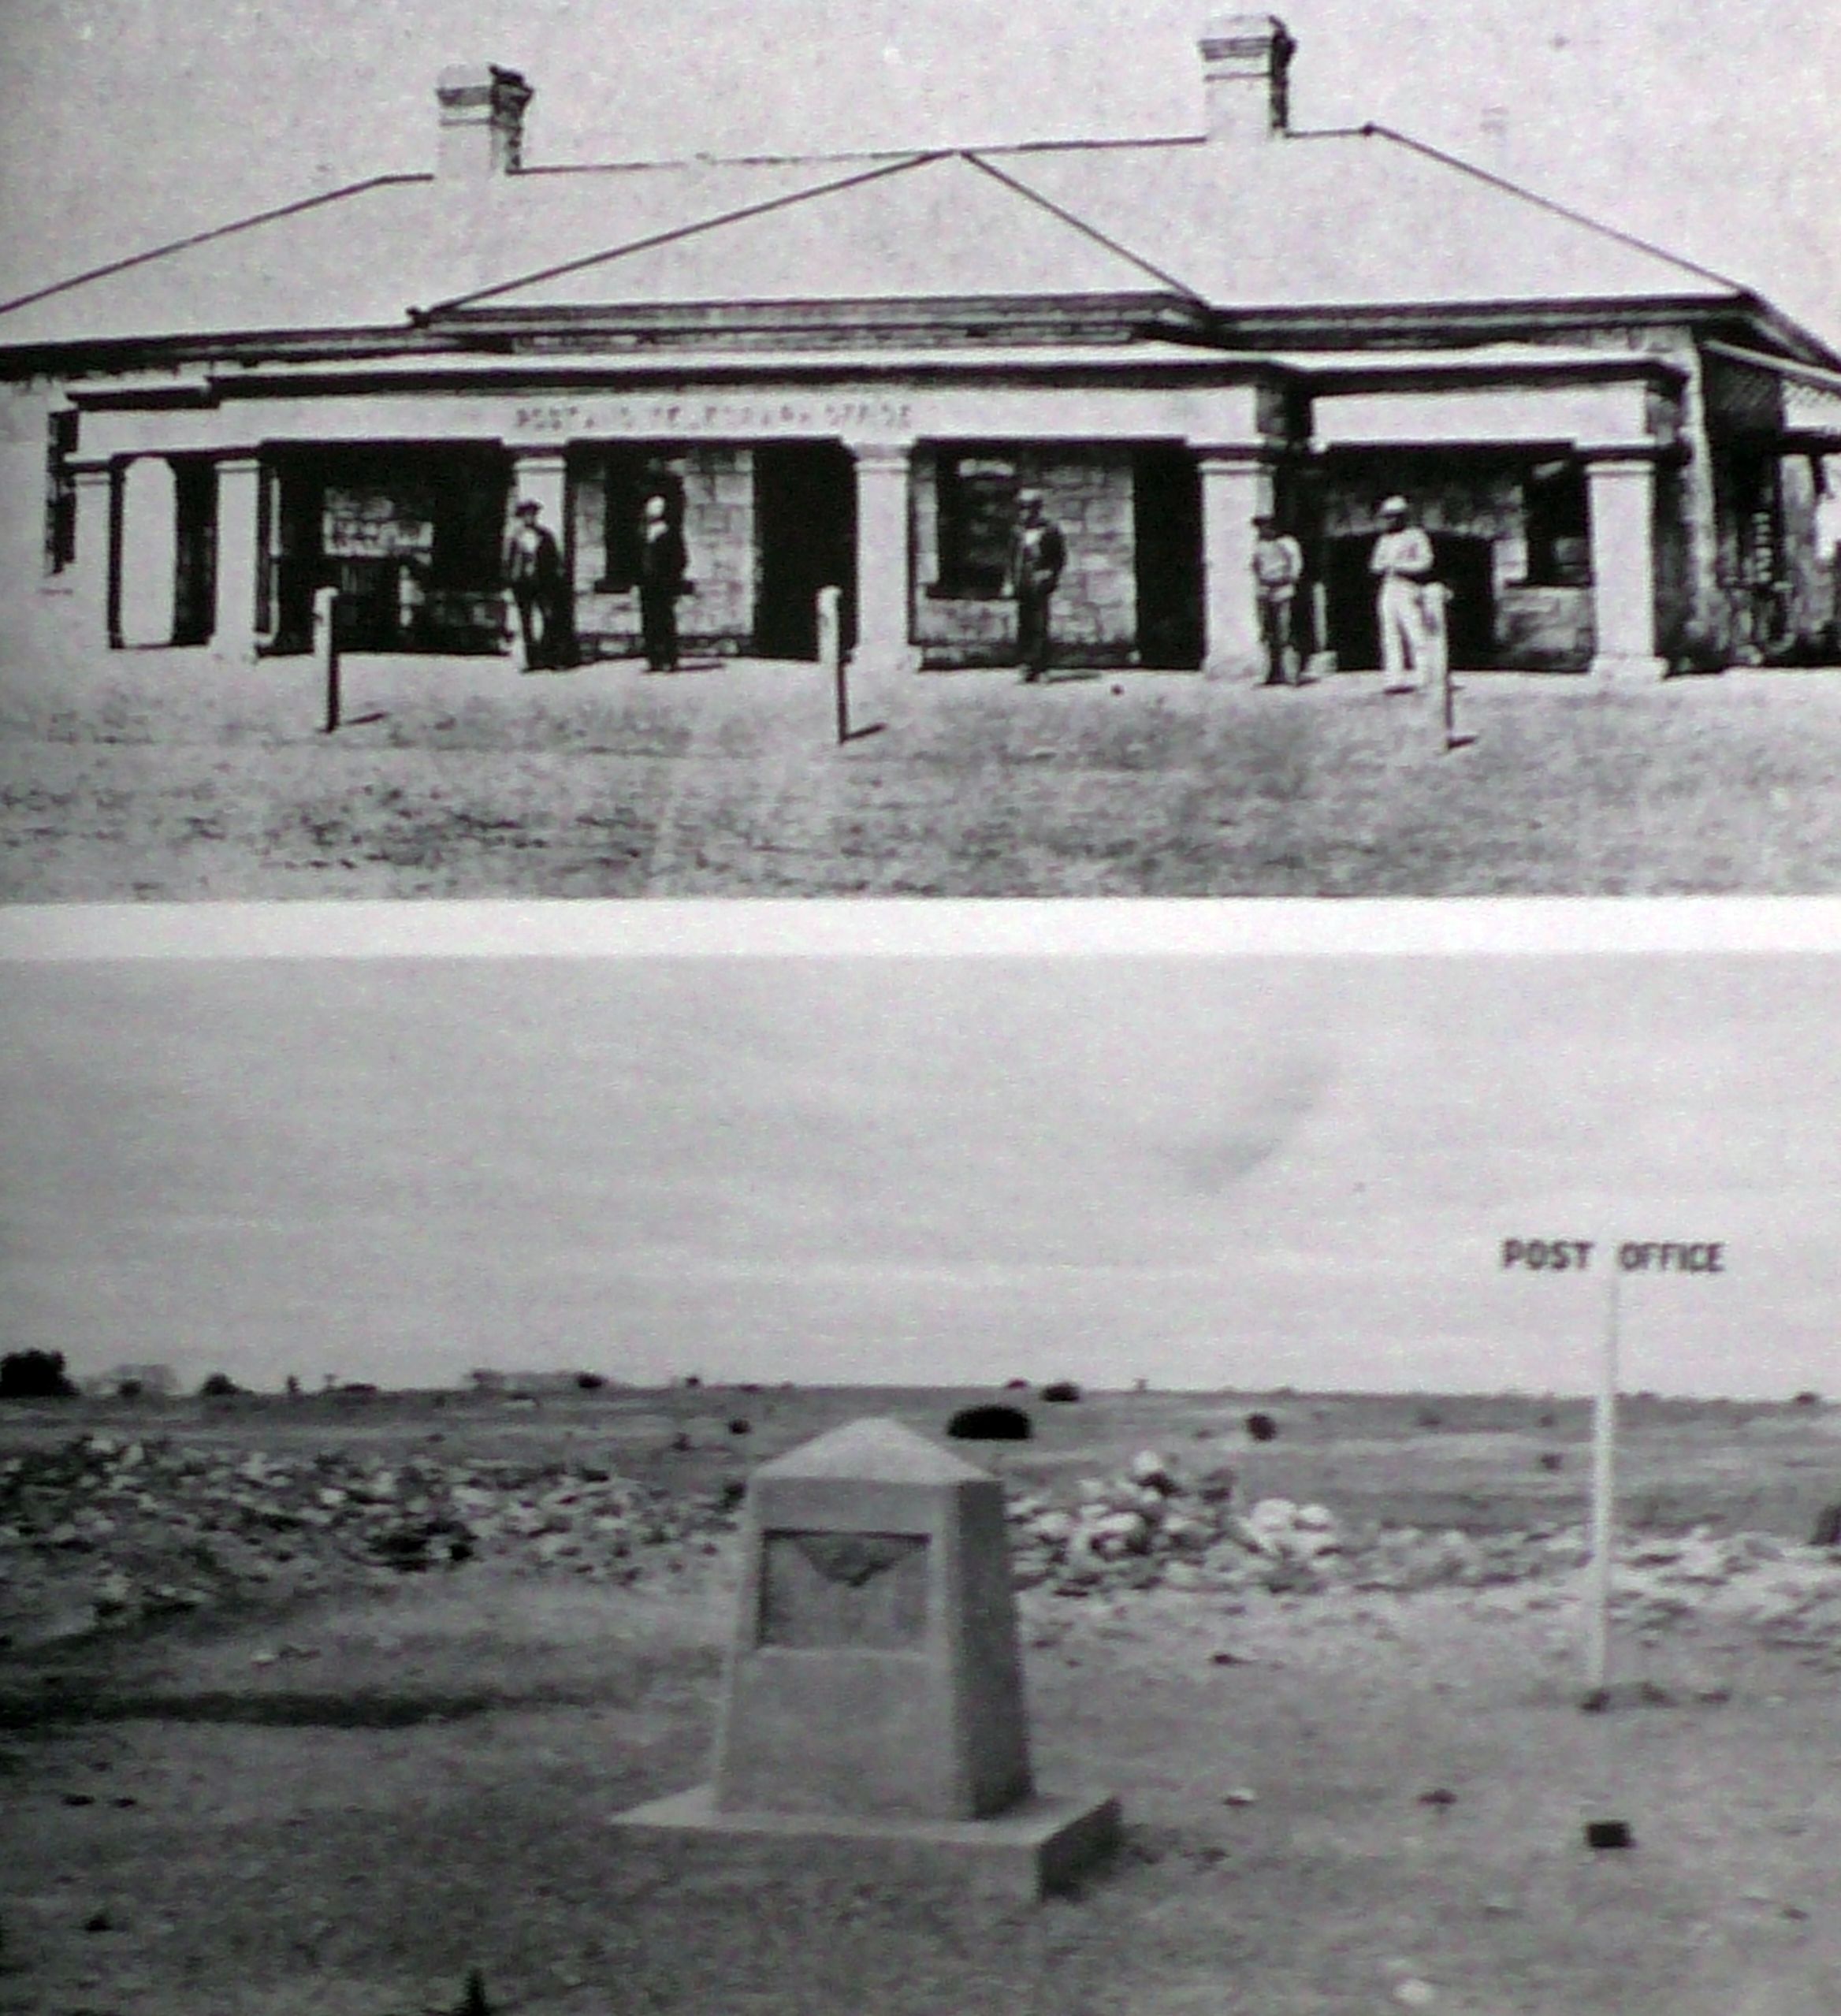 Kanowna post office & site